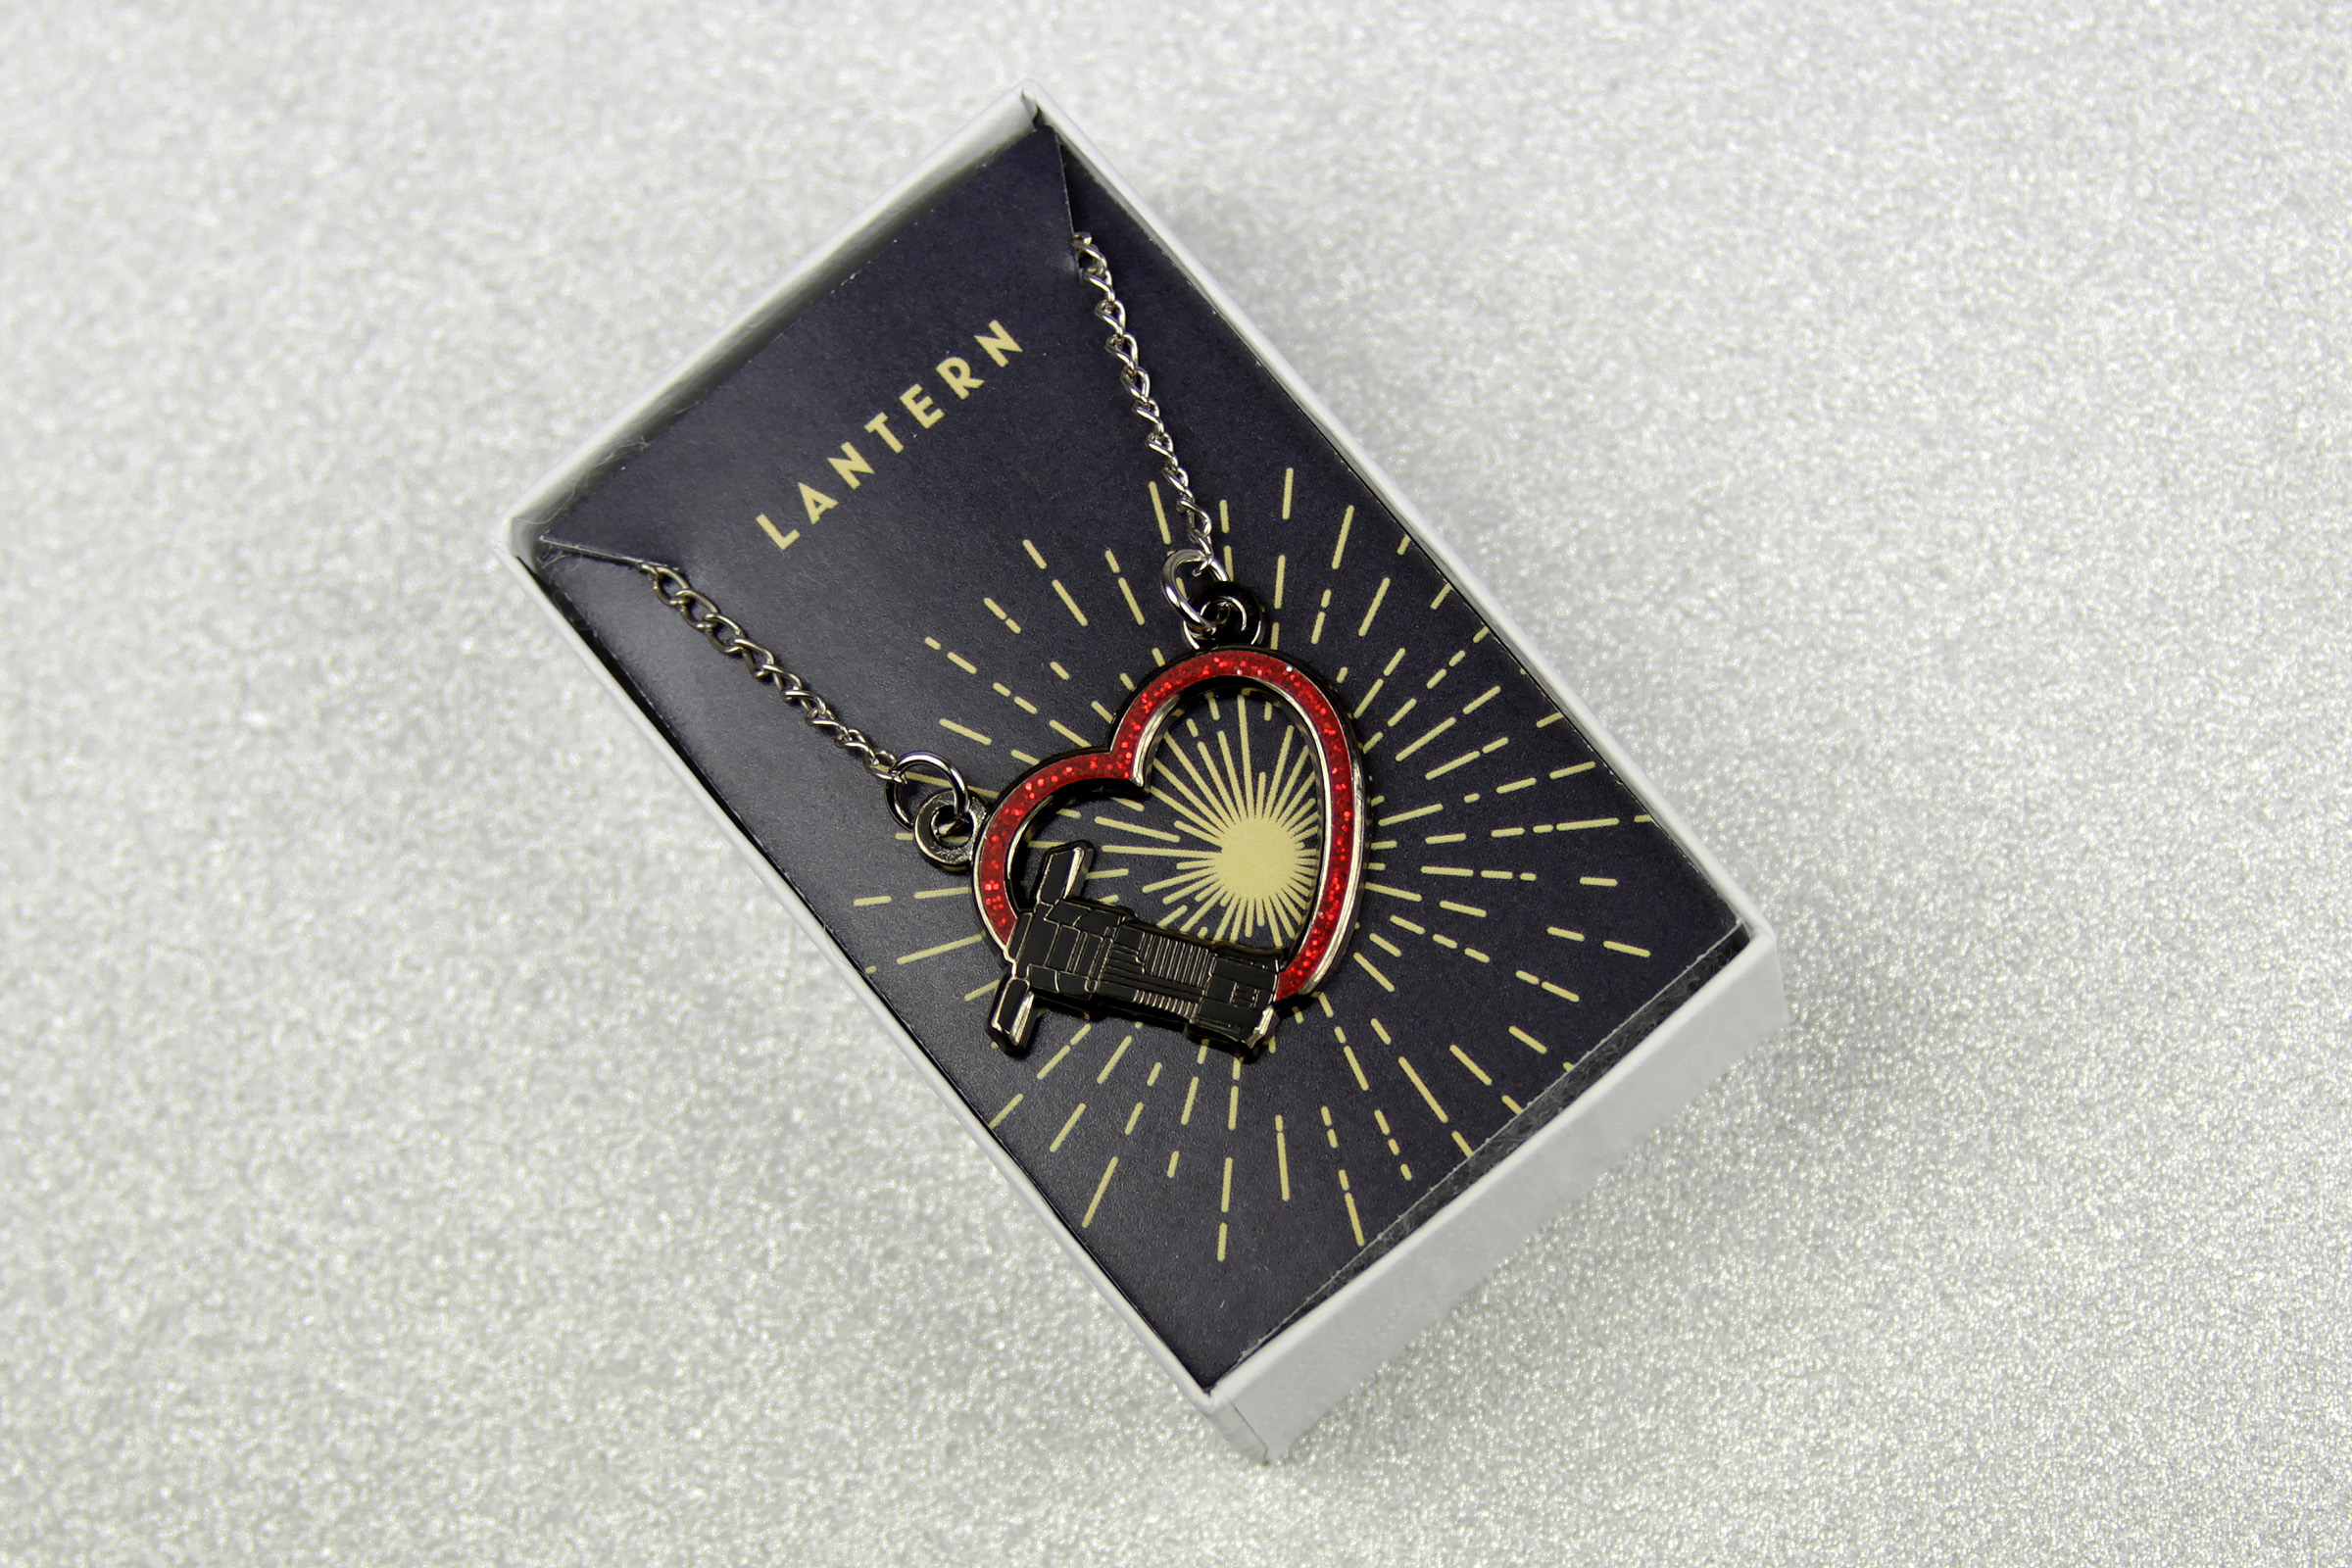 Star Wars Kylo Ren Lightsaber Heart Necklace by Lantern Pins